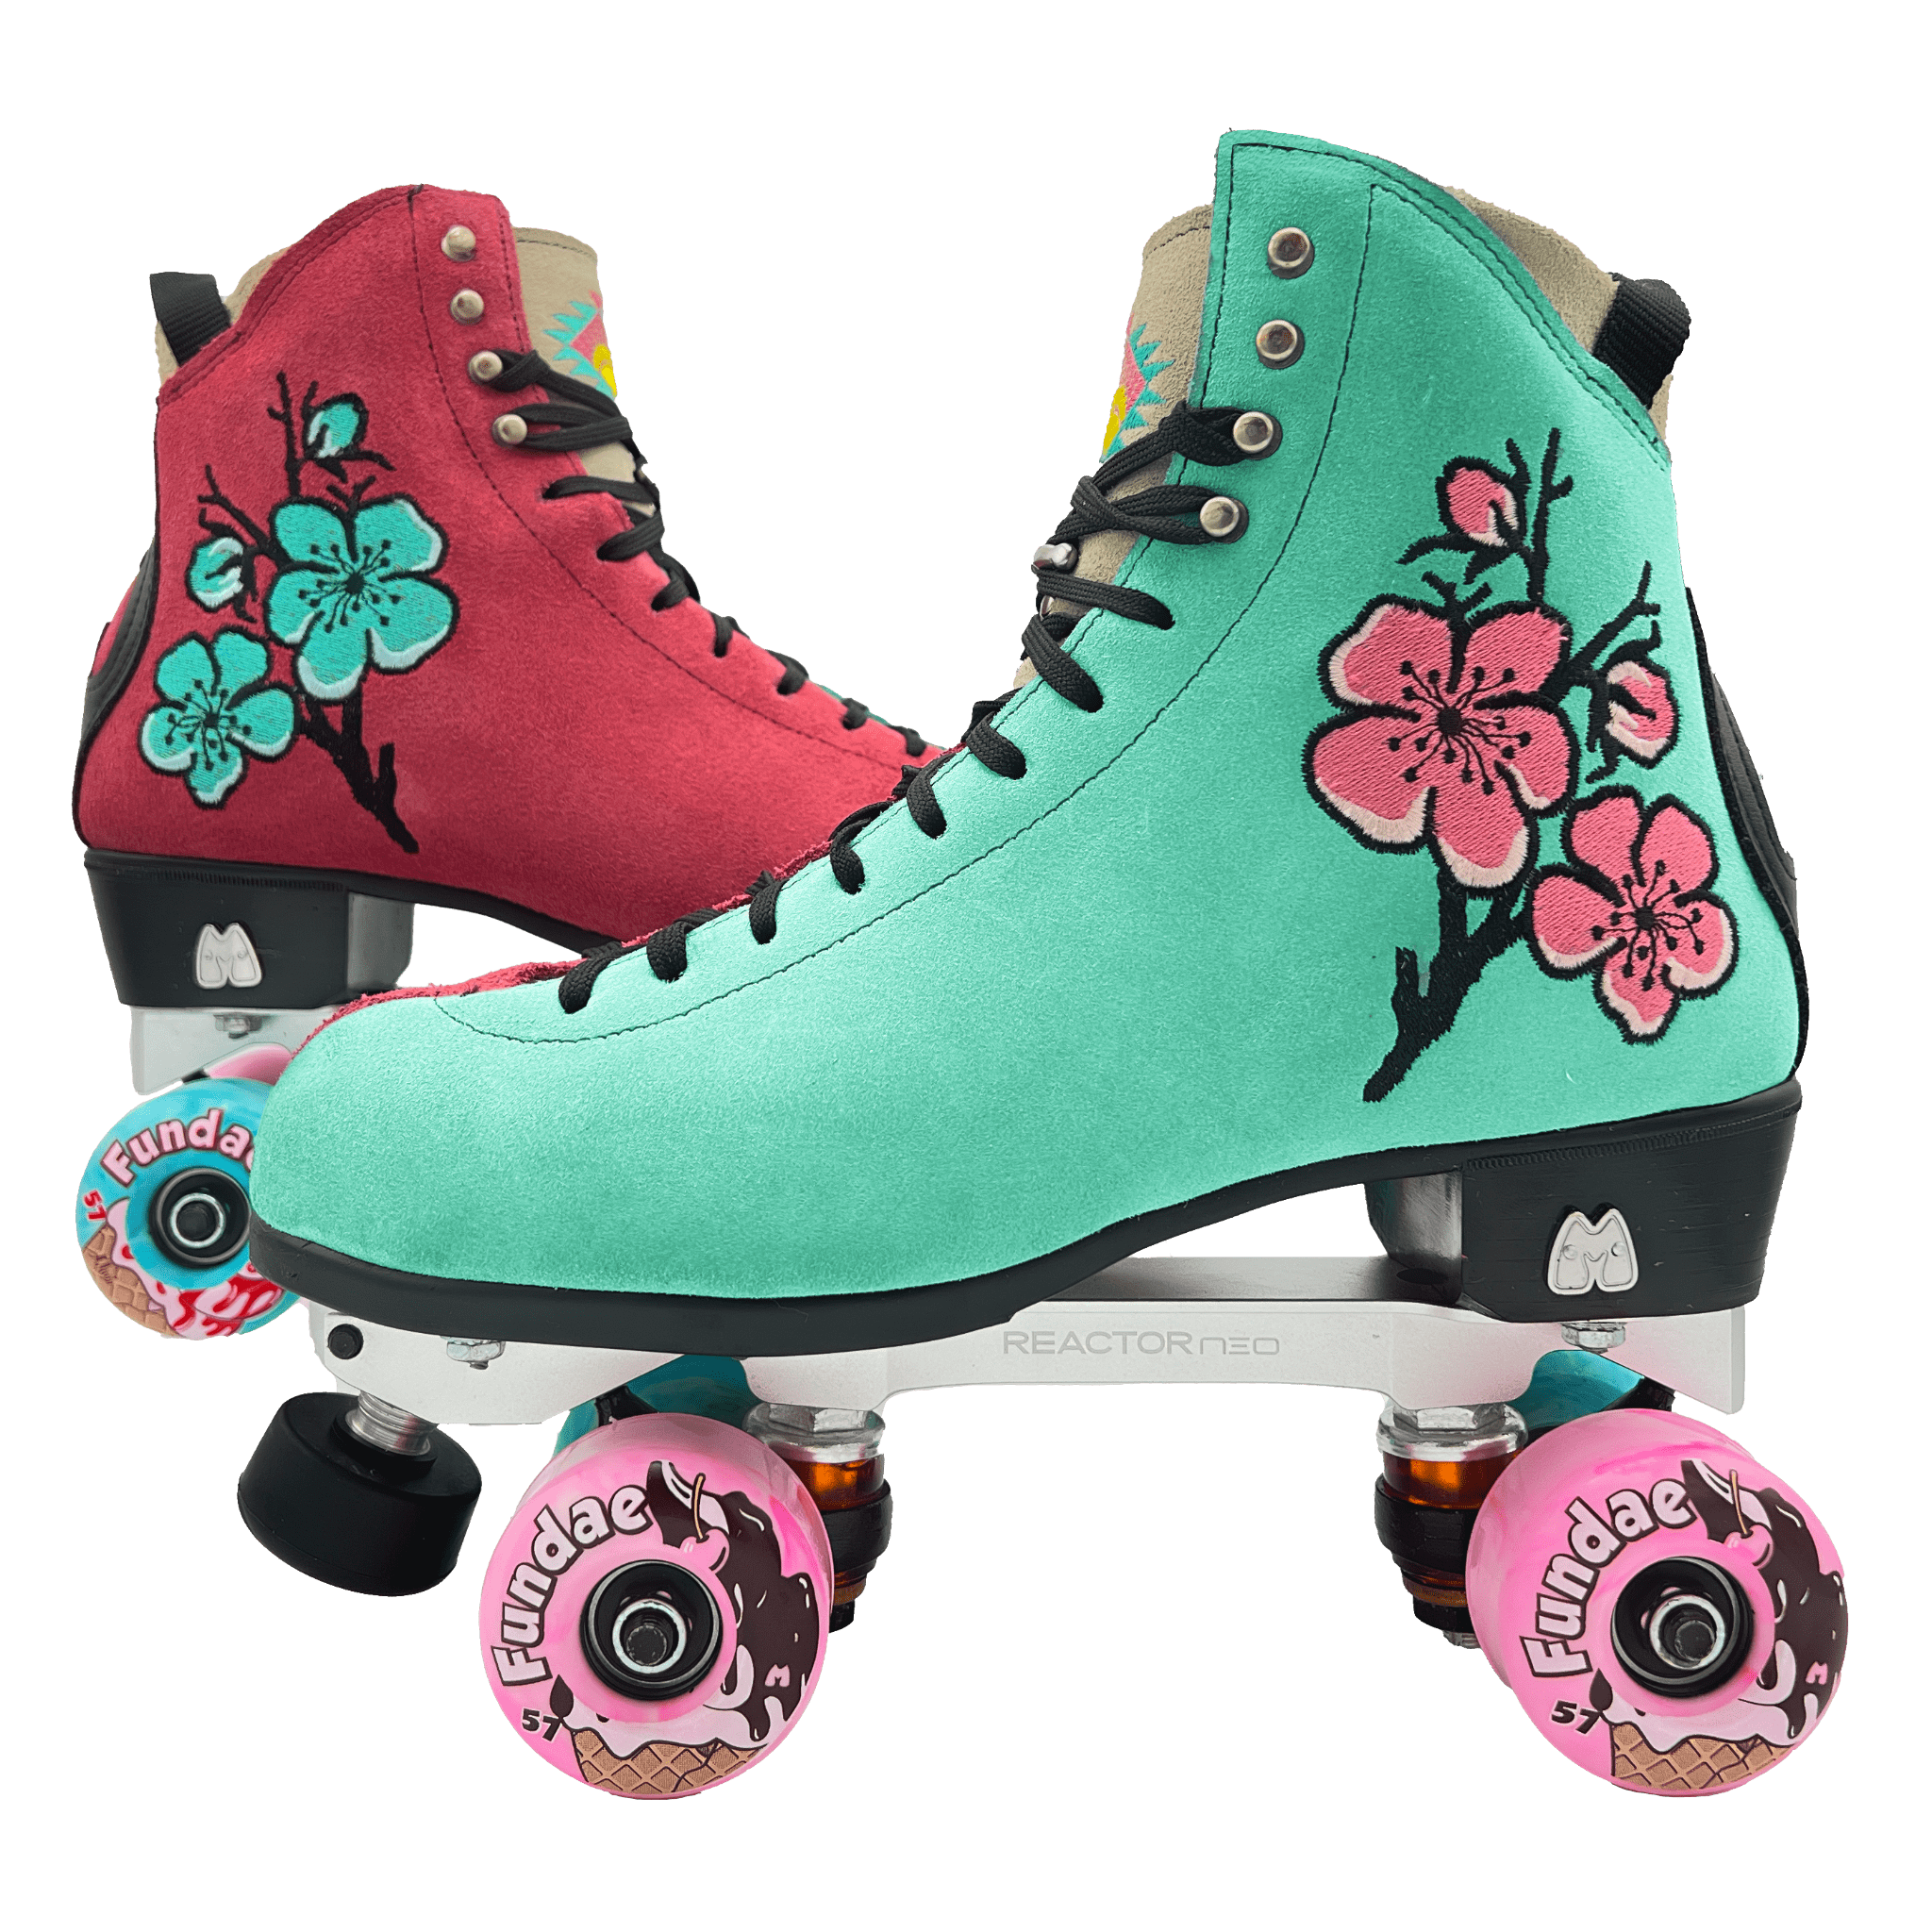 Skate-cation Duffle – Moxi Shop